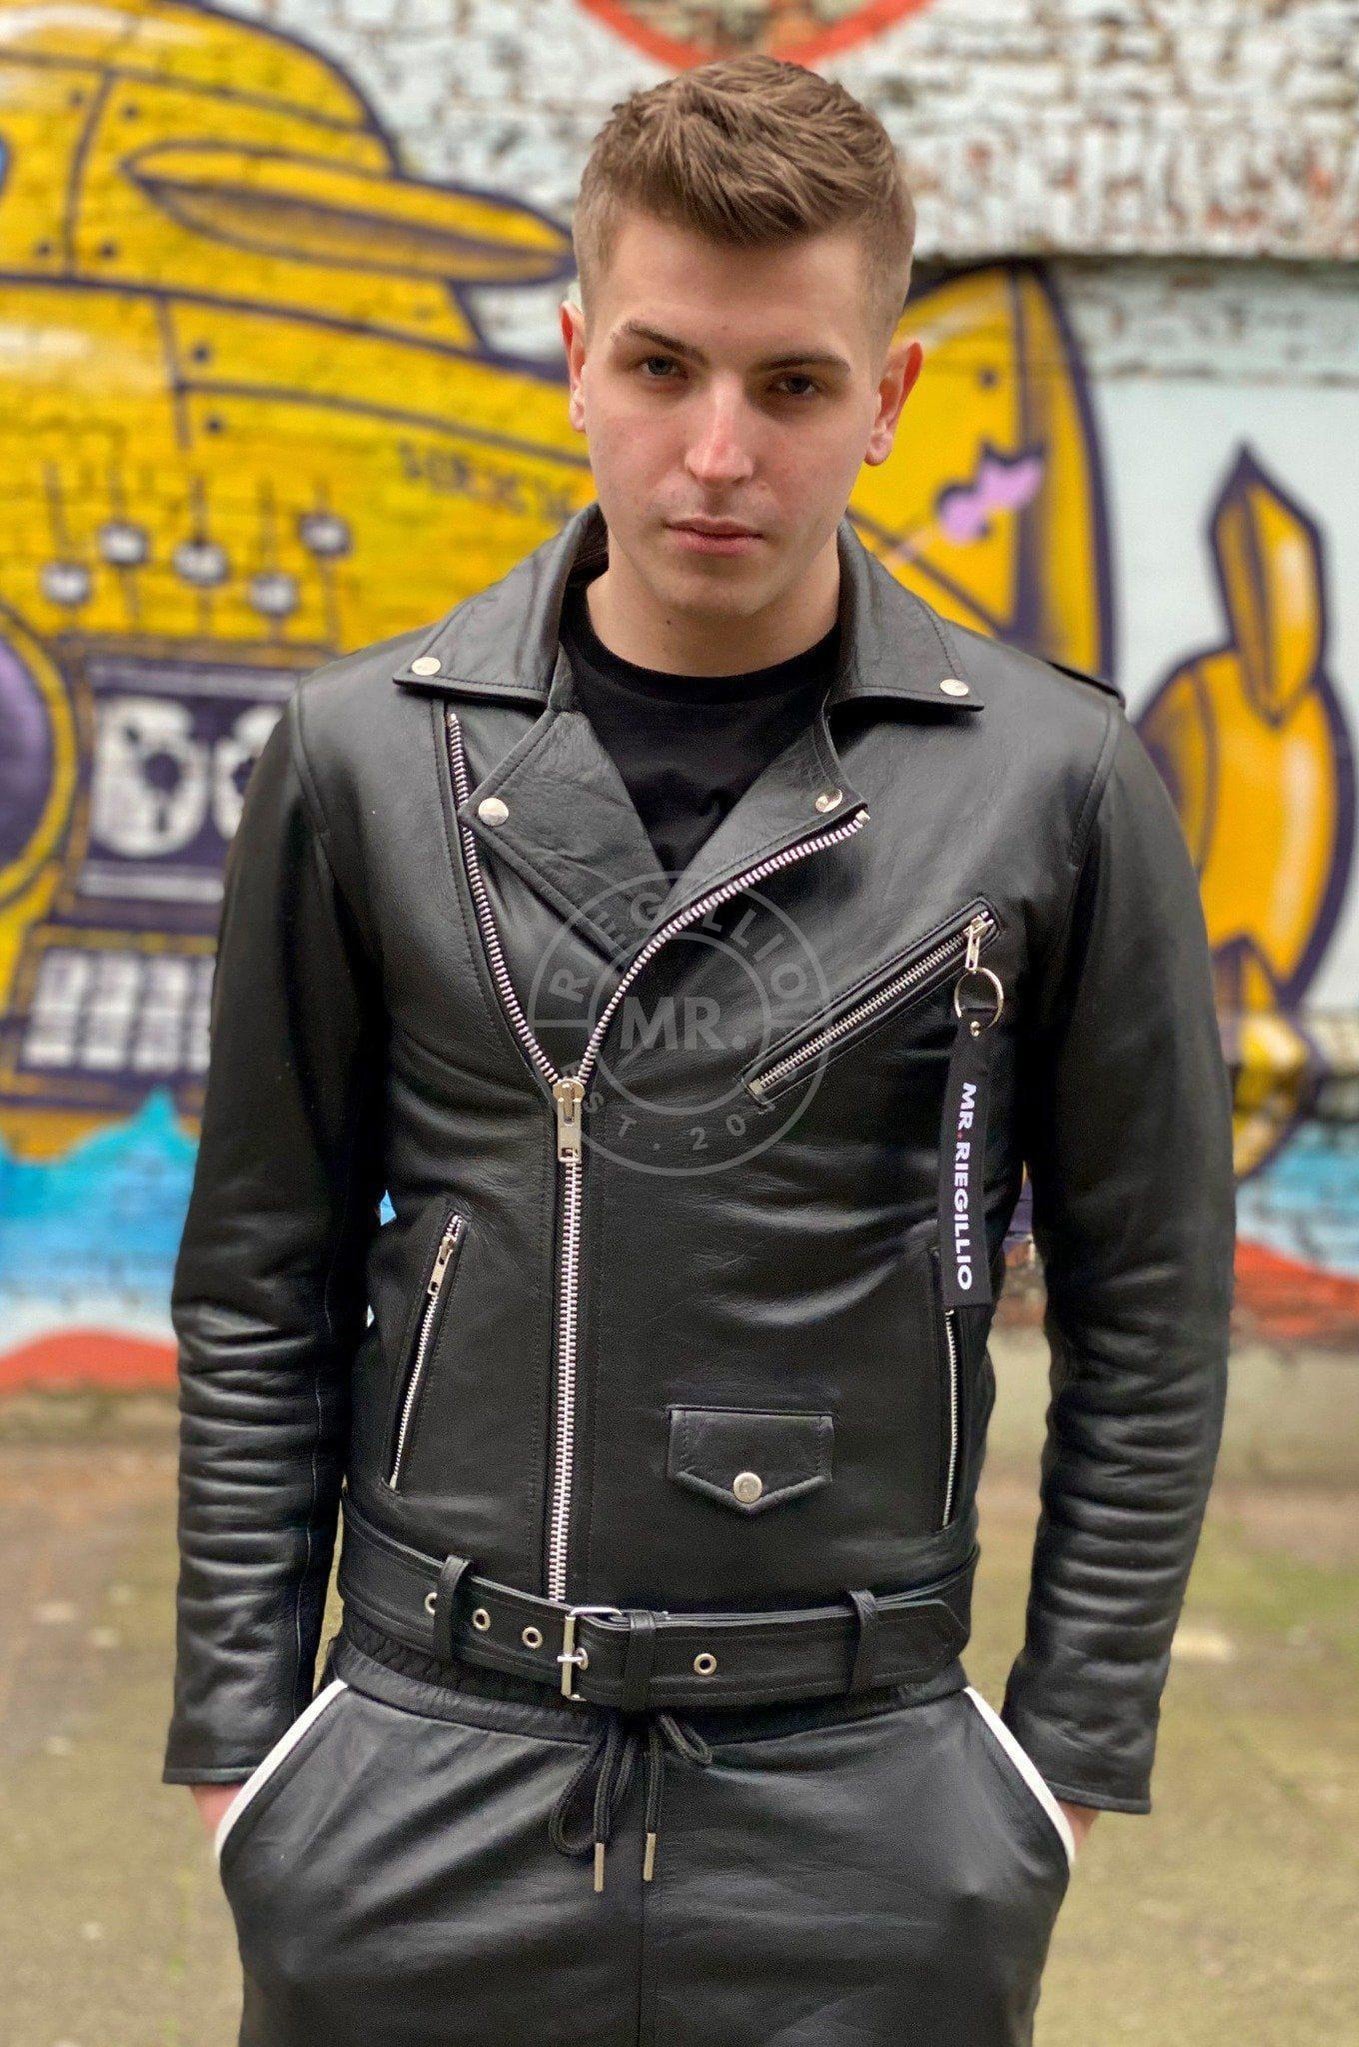 Leather Brando Jacket at MR. Riegillio